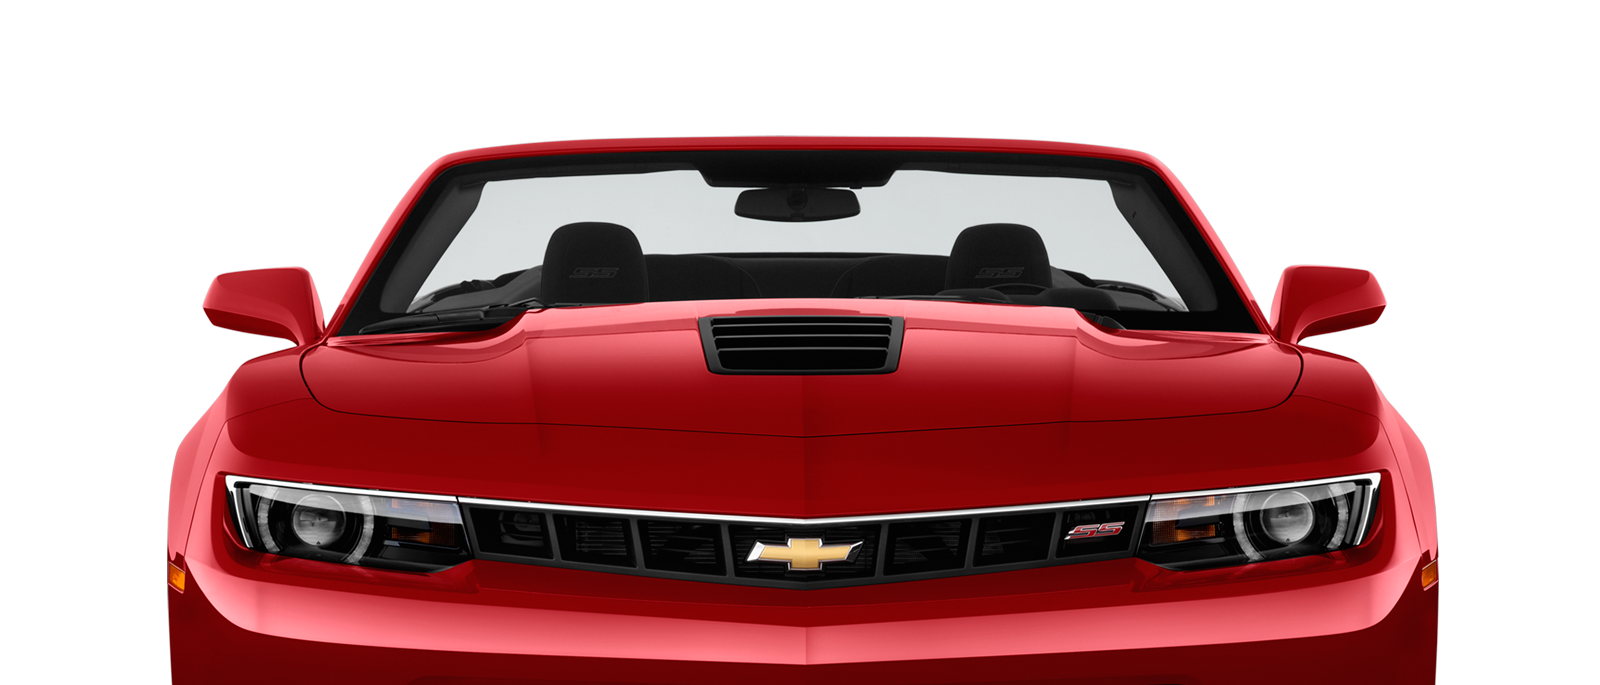 Chevrolet Corvette PNG Image